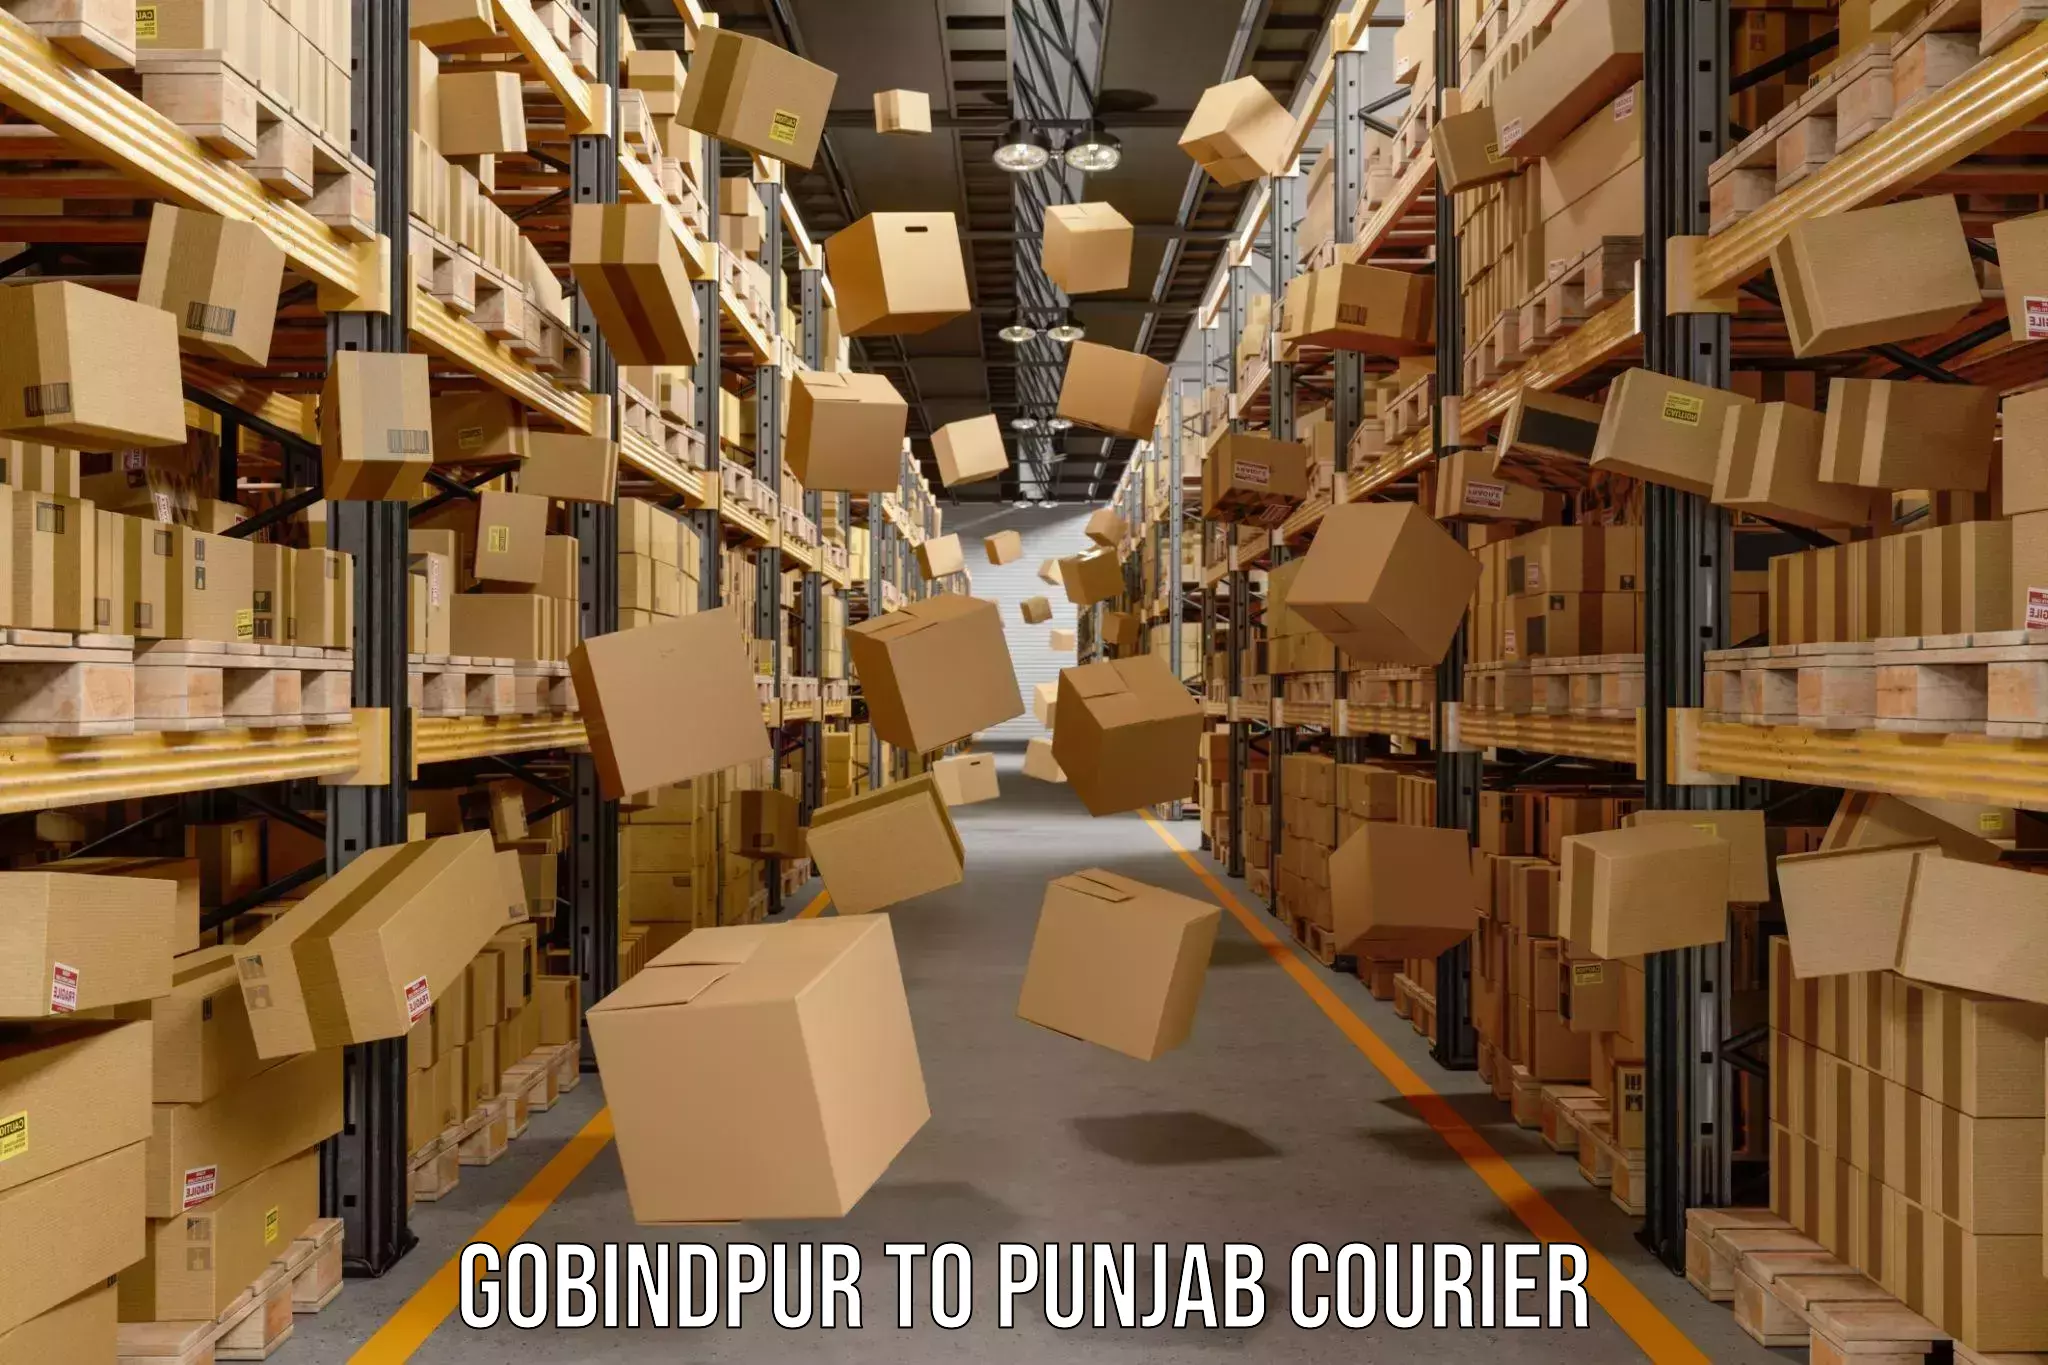 Courier app Gobindpur to Malerkotla